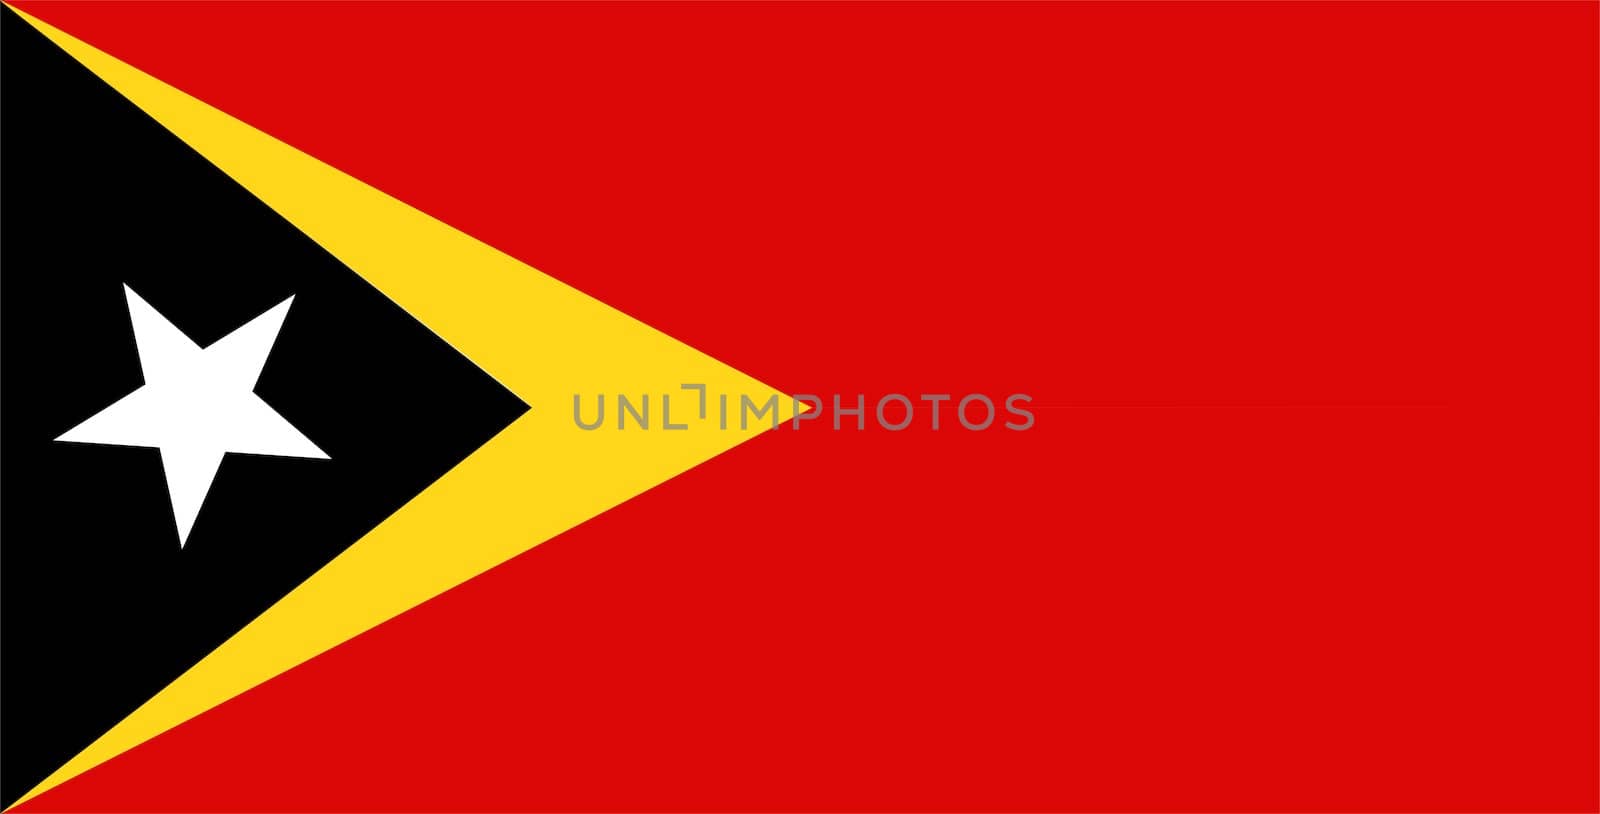 East Timor Flag by tony4urban